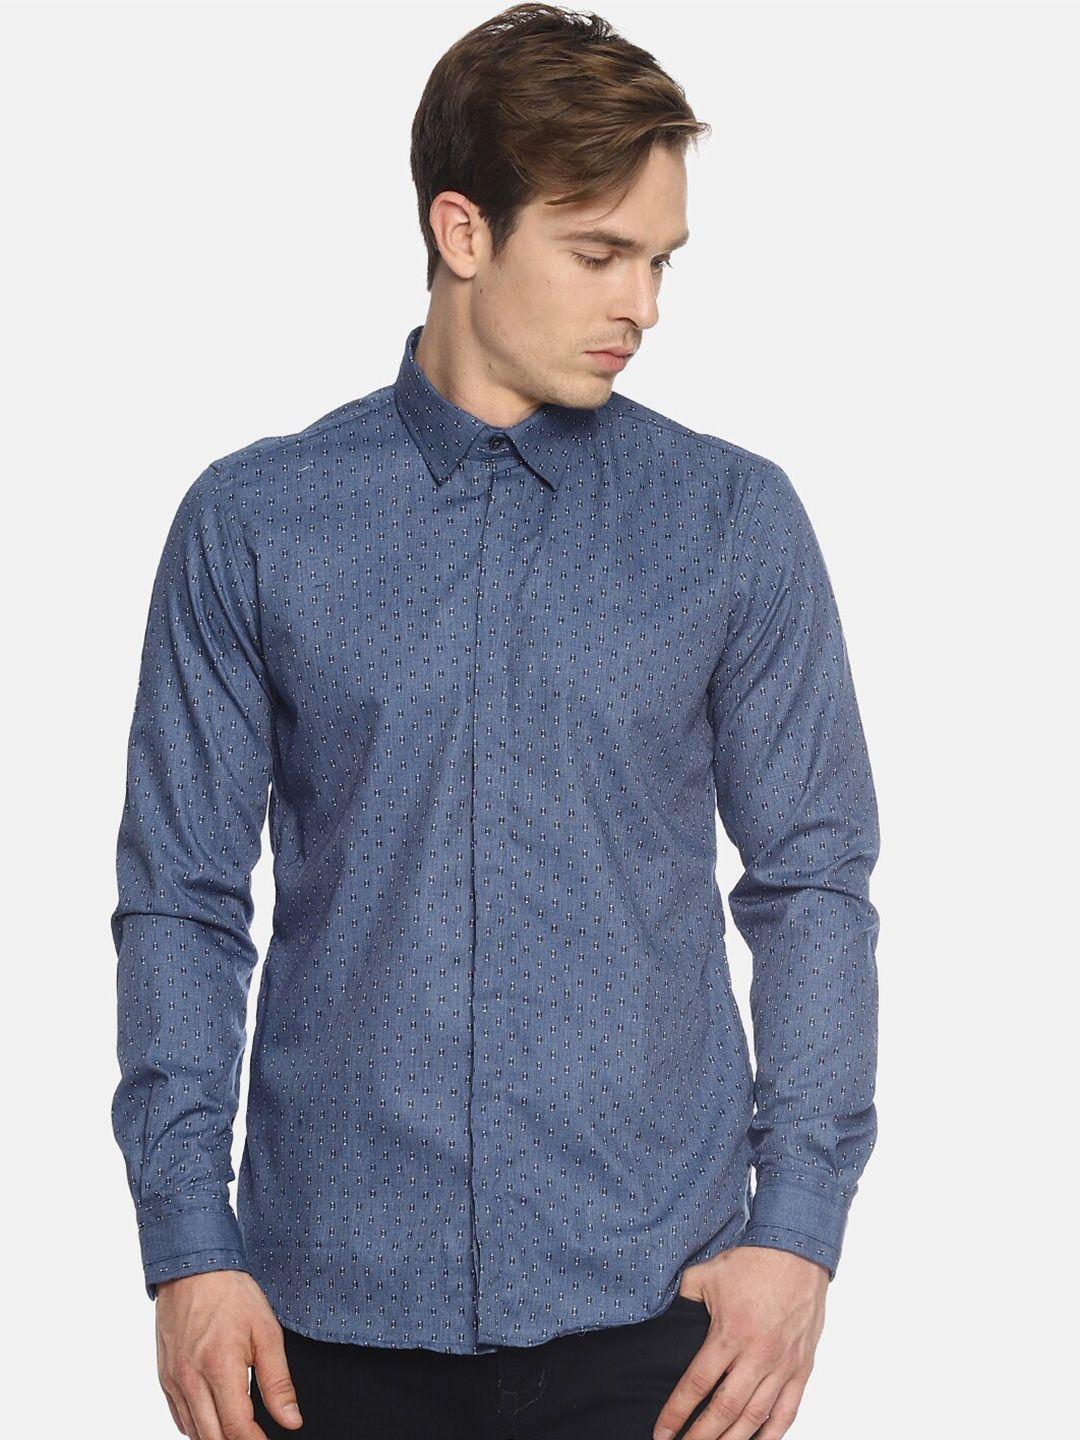 couper-&-coll-men-blue-premium-slim-fit-printed-casual-shirt